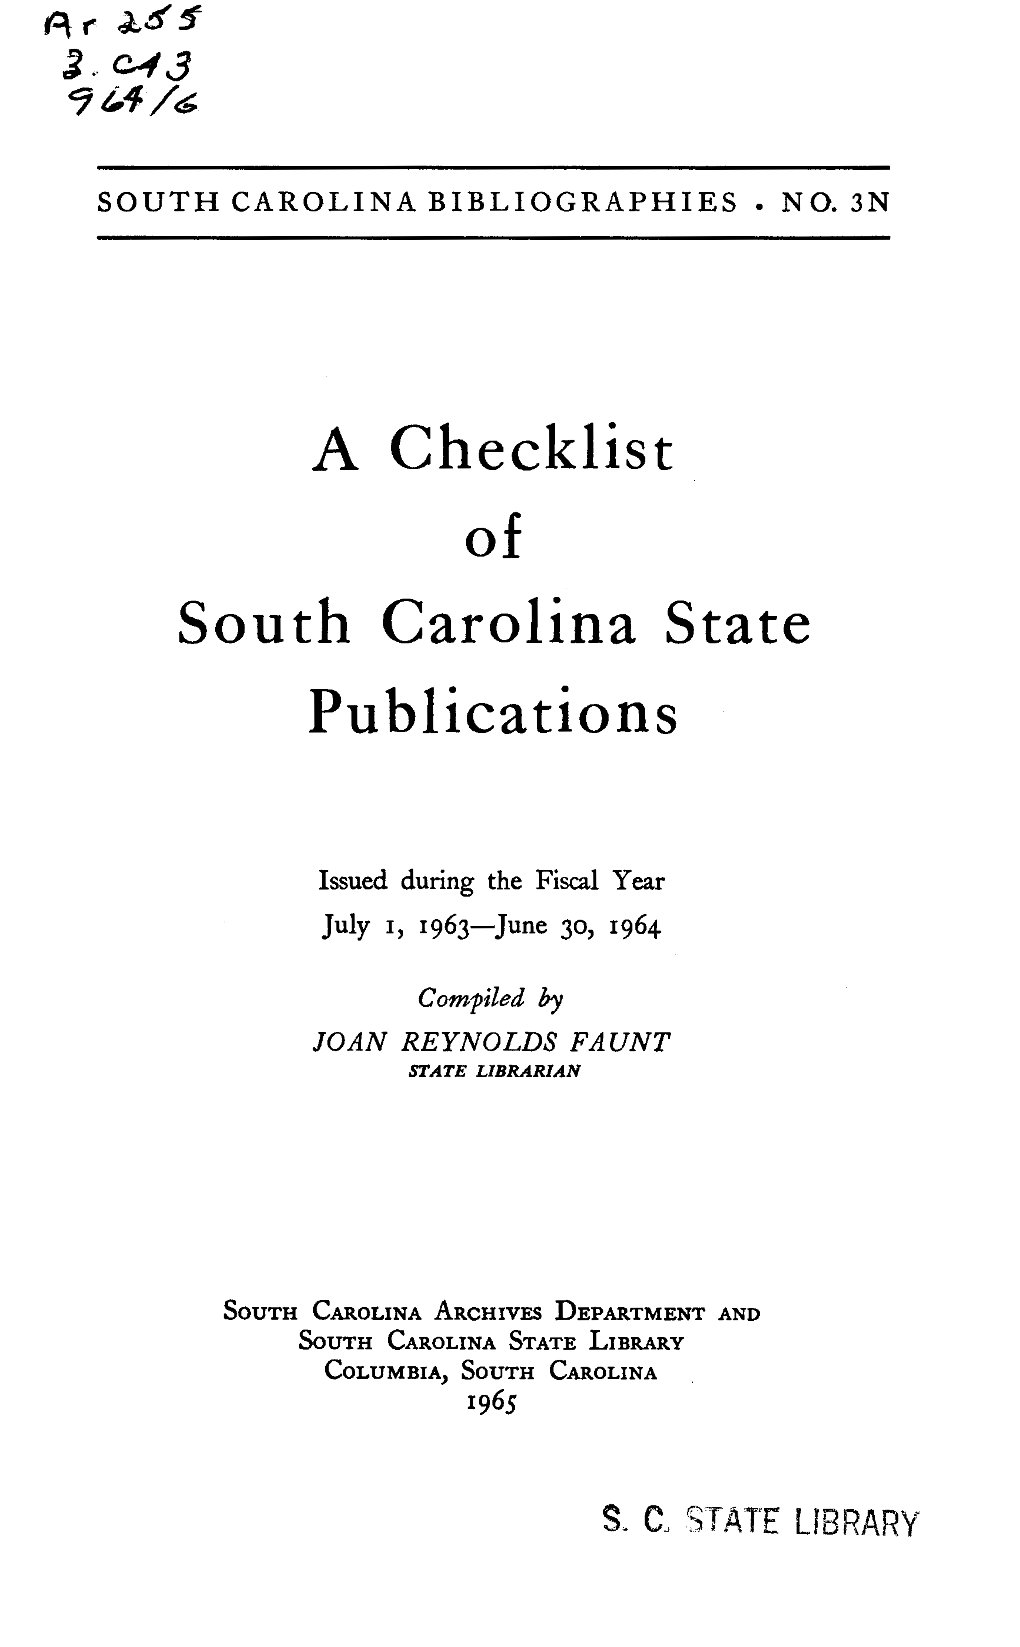 A Checklist of South Carolina State Publications